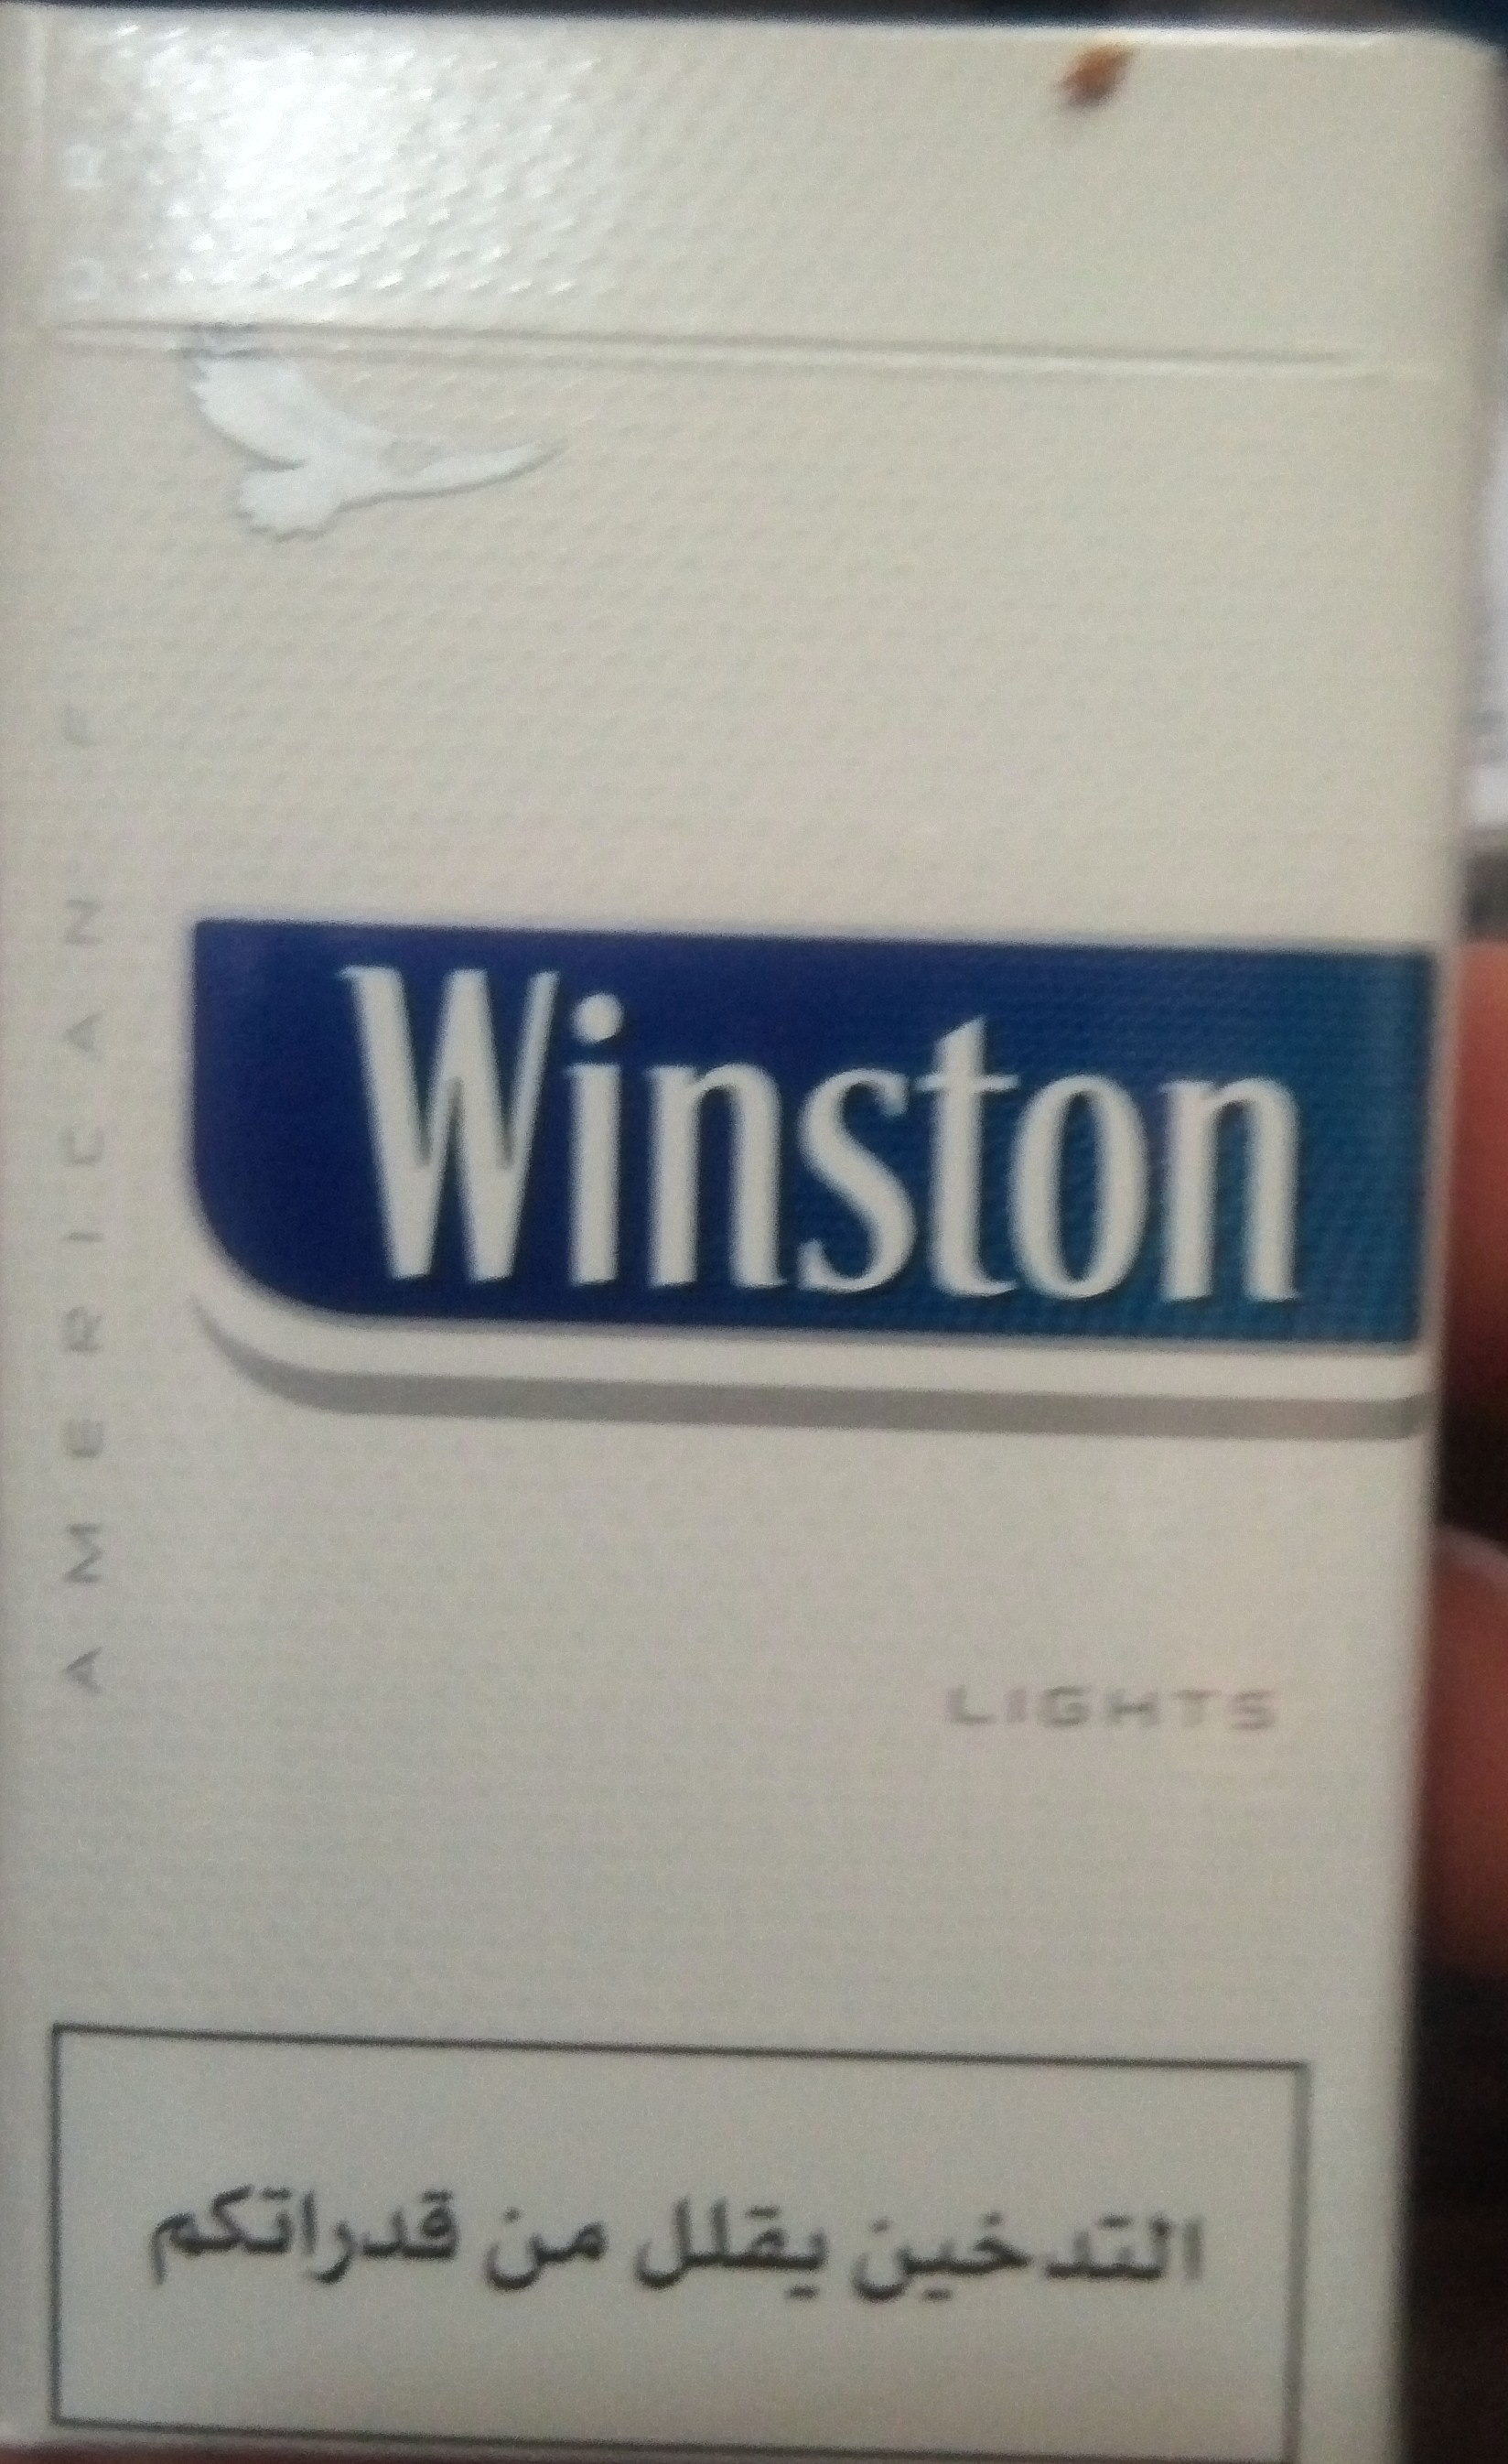 winston - Product - fr